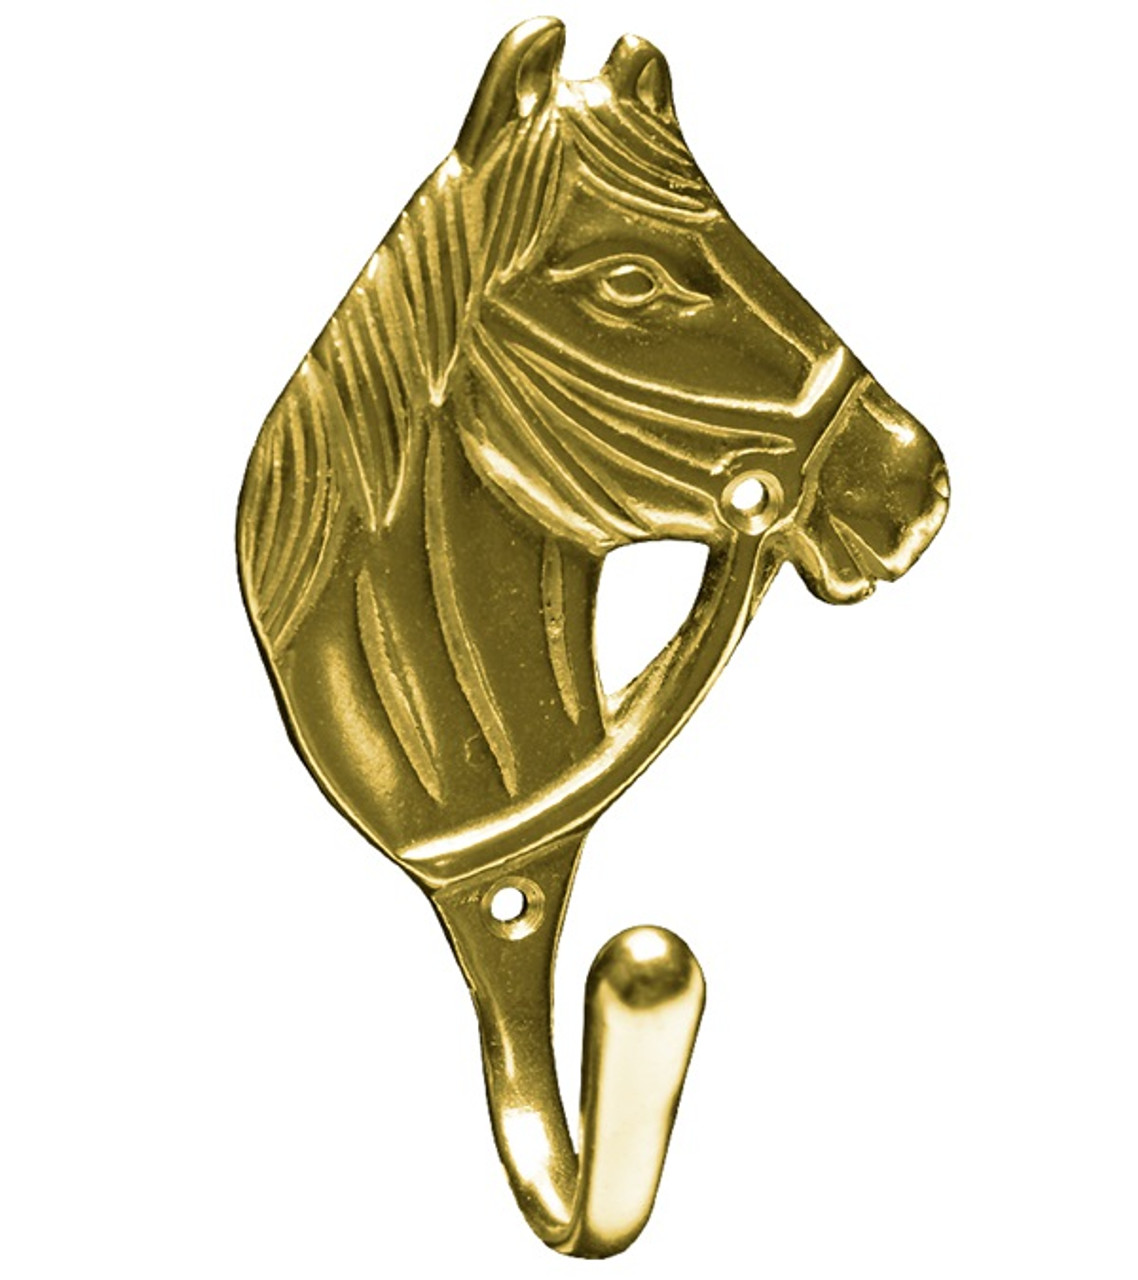 Brass Horsehead Hook